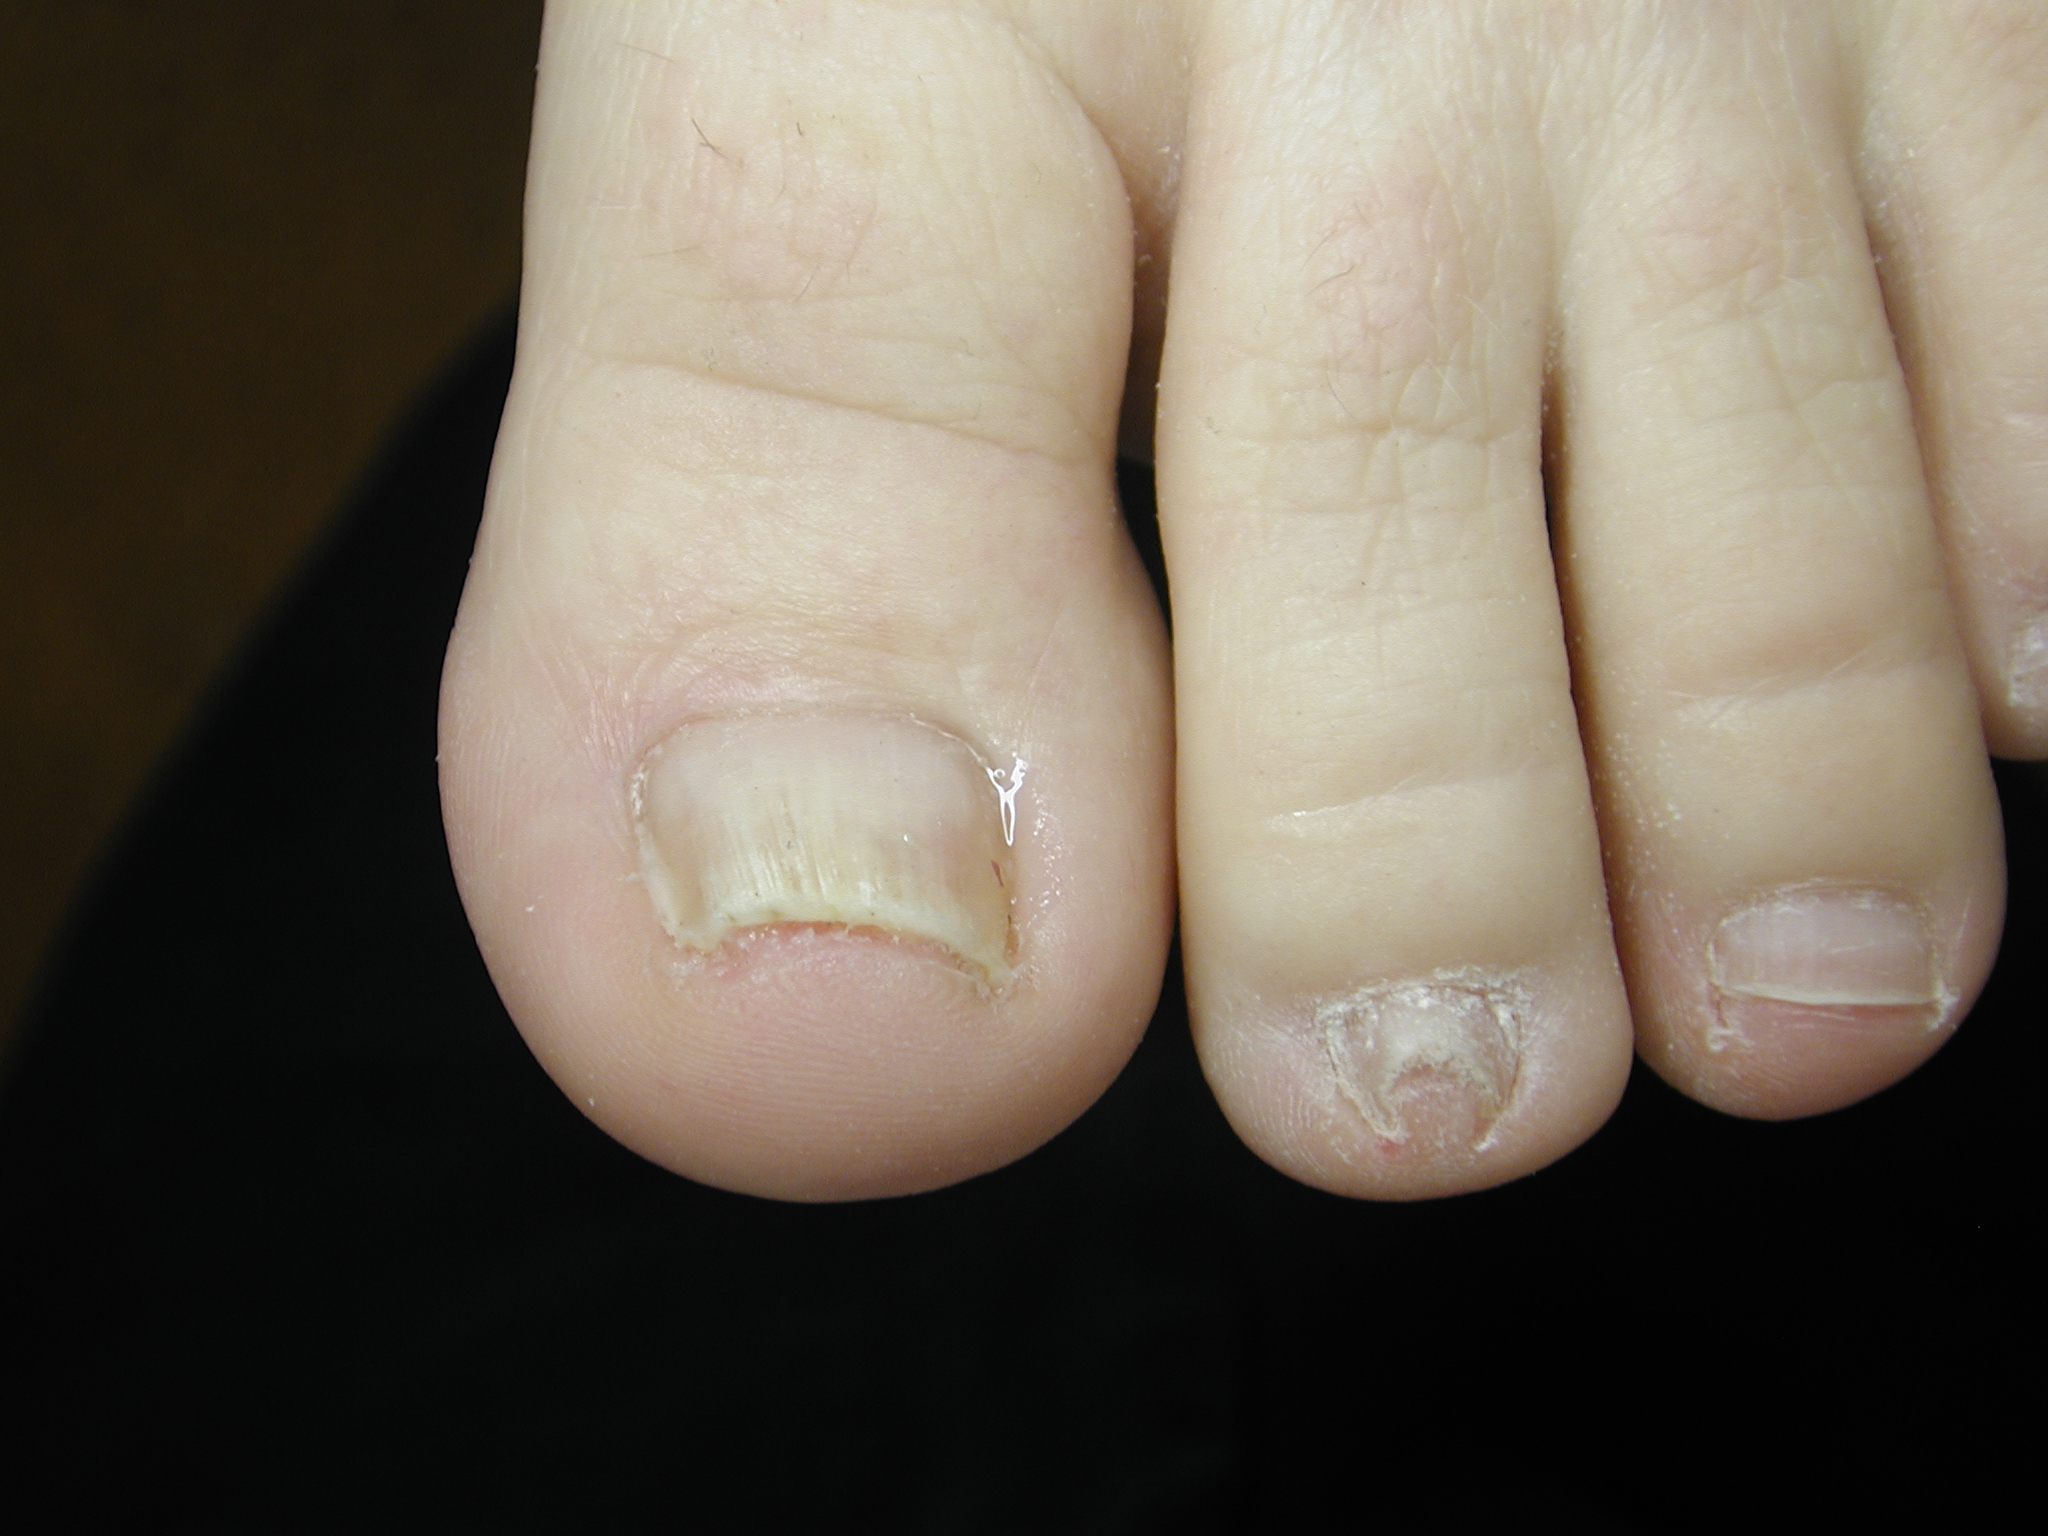 Ingrowing toenail correction with surgery & bracing | Foot Fix Clinic